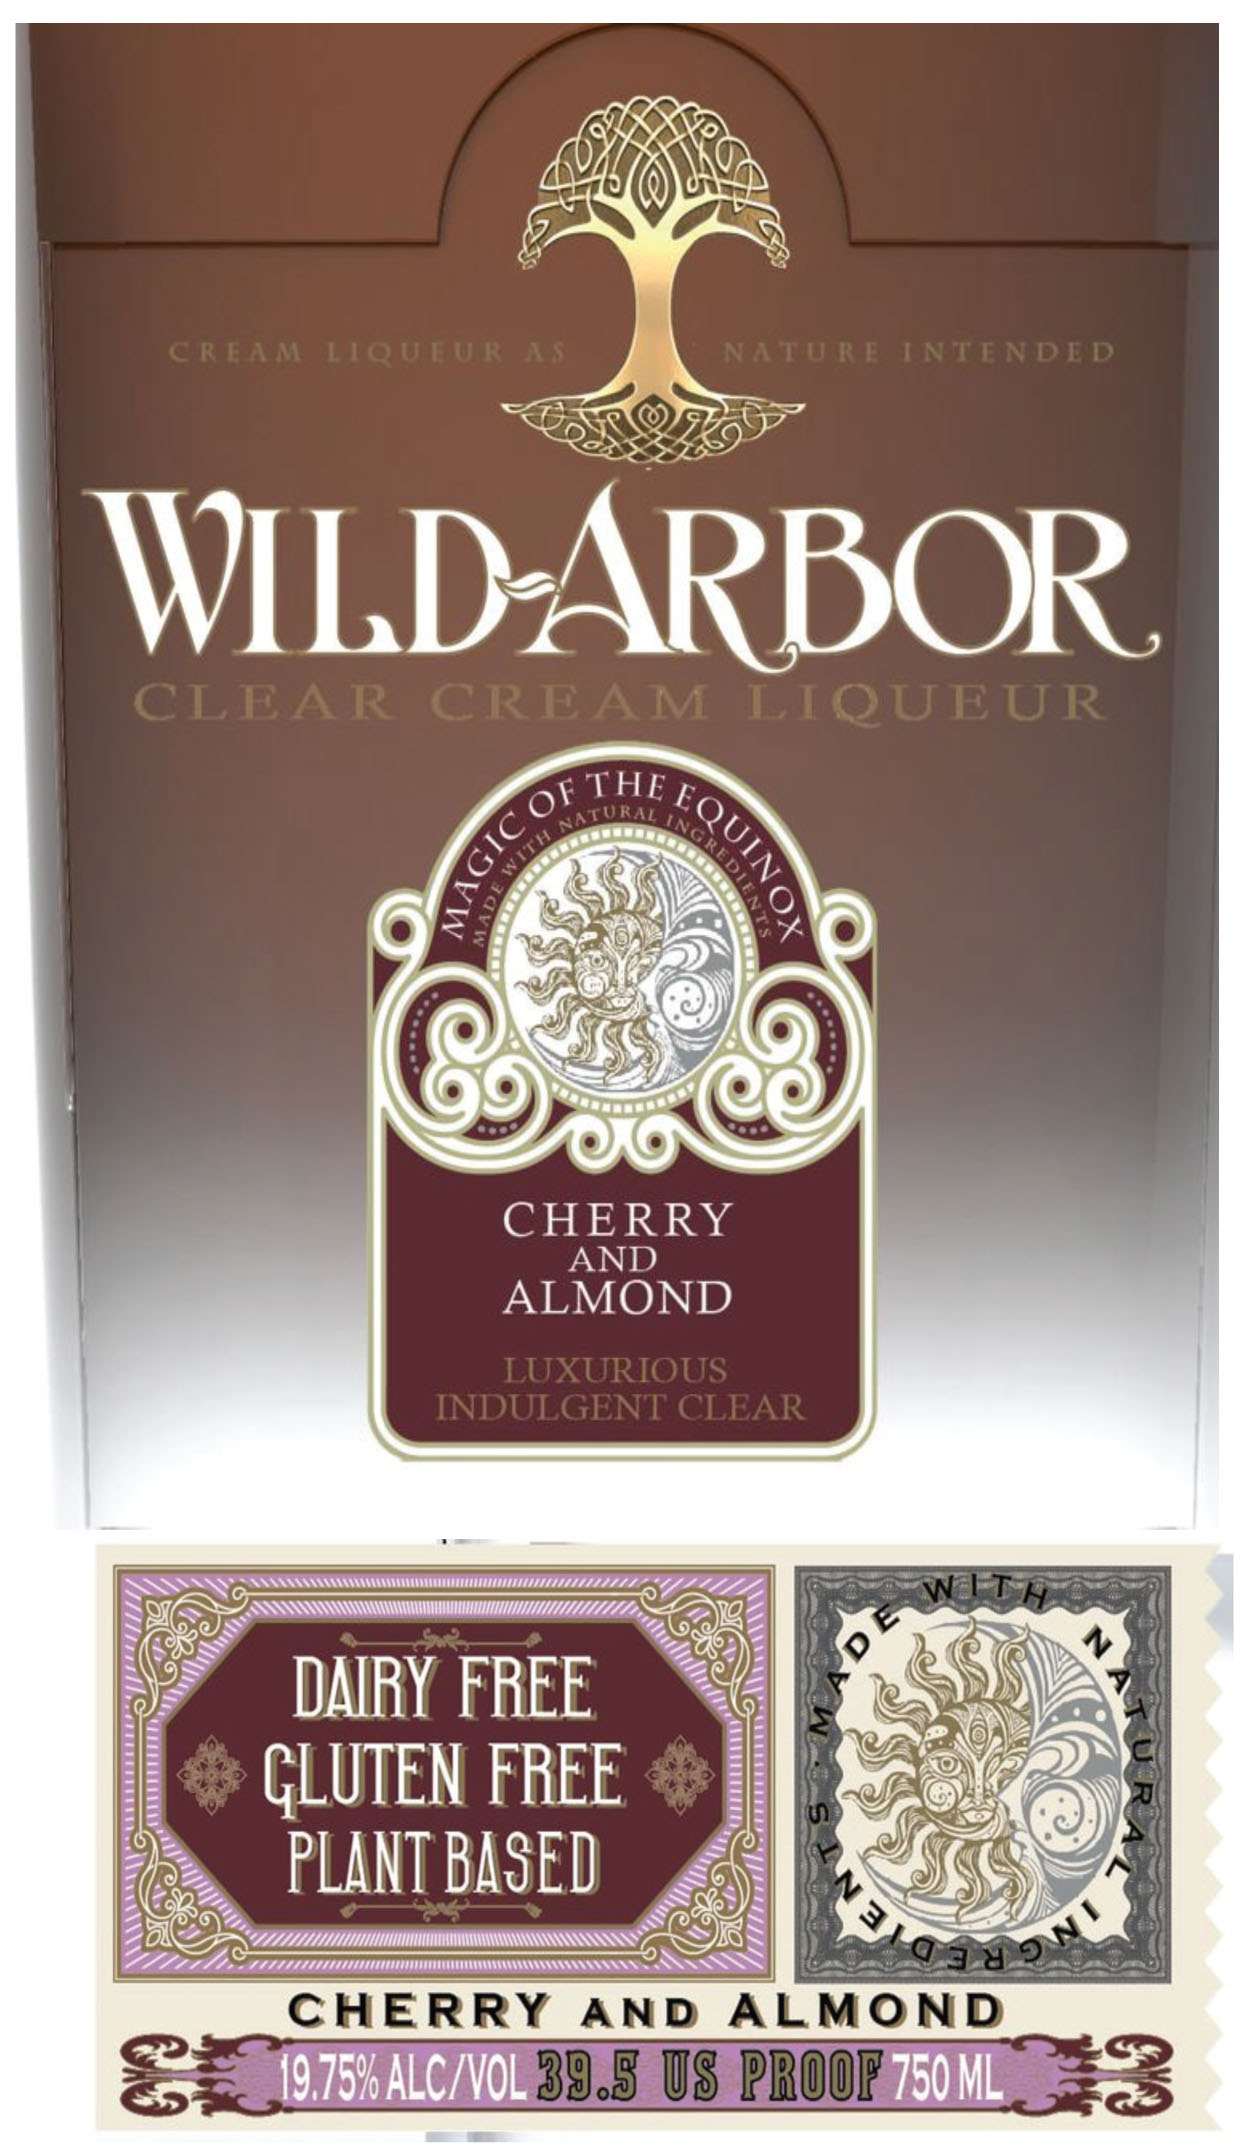 Wild Arbor - Cherry and Almond - Magic of the Equinox label